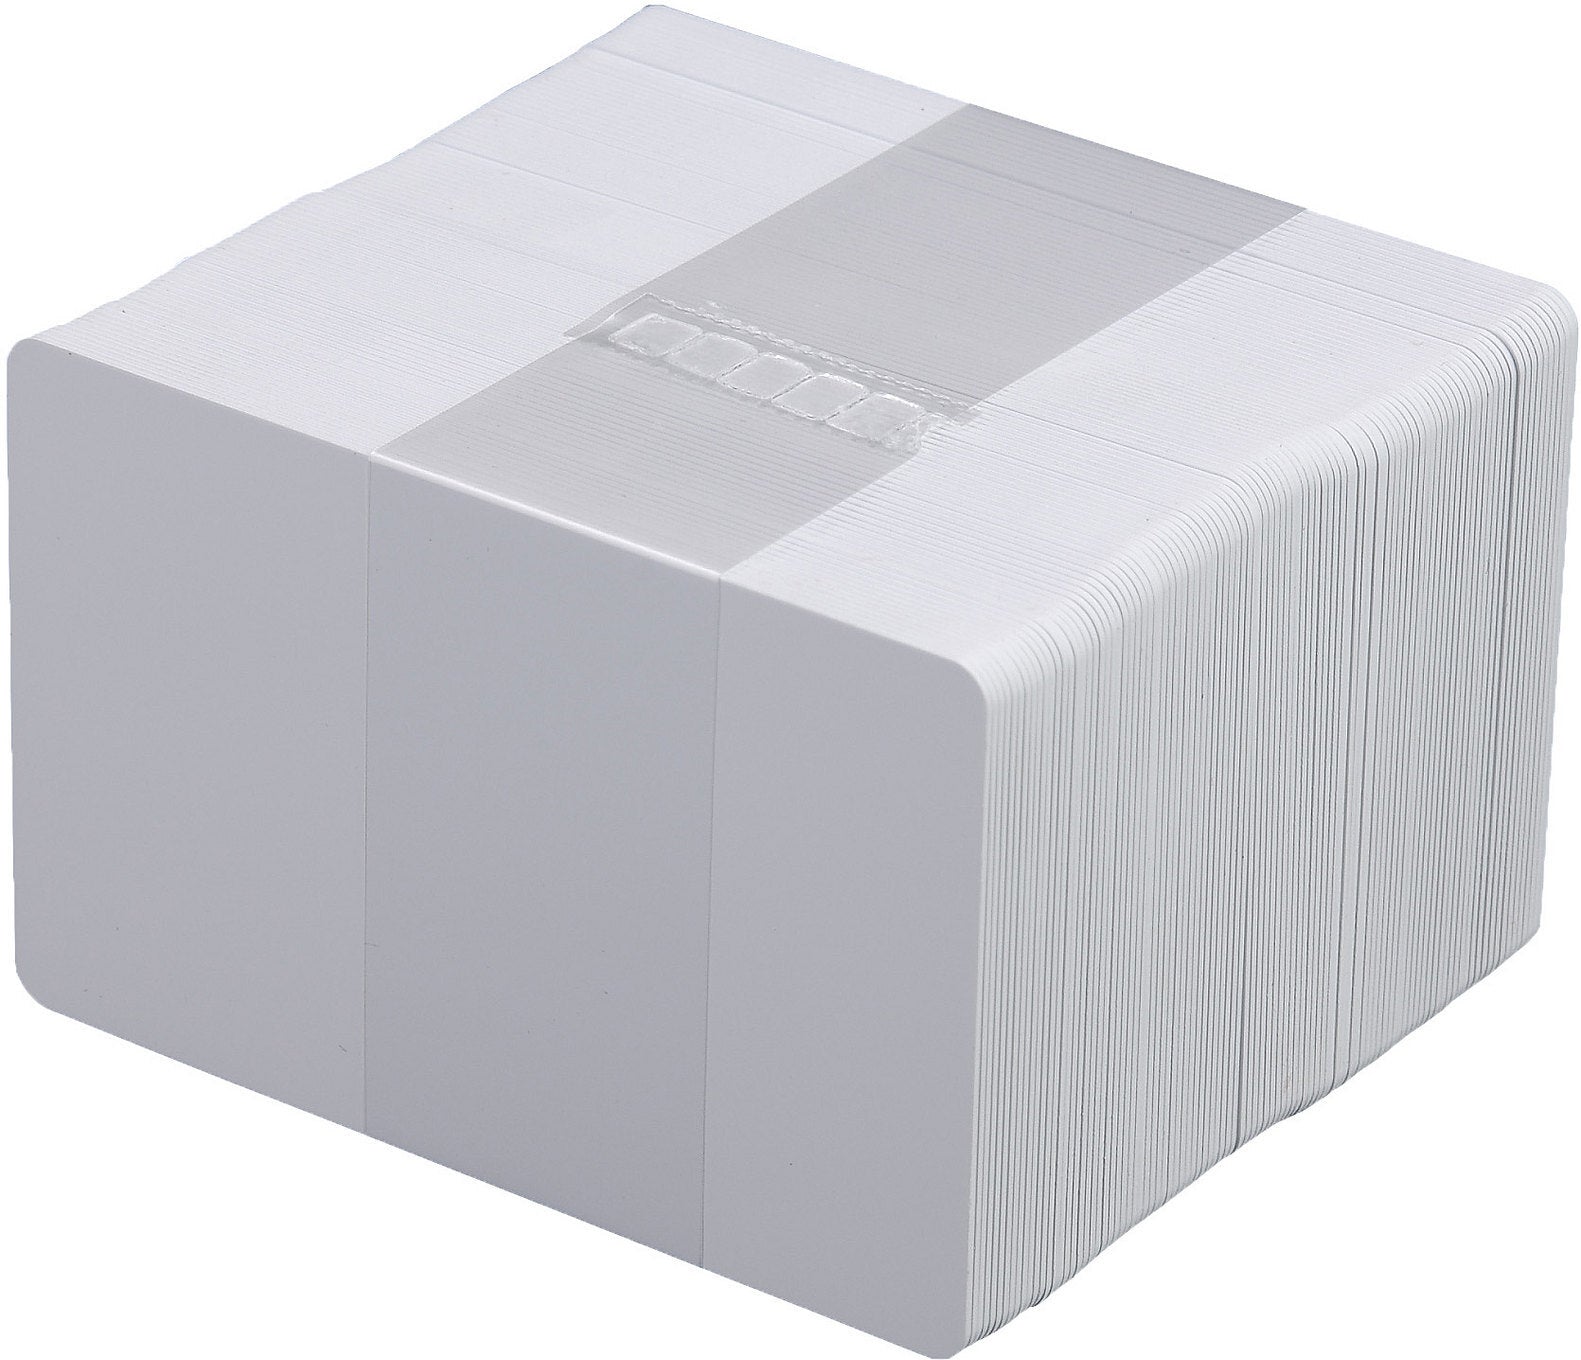 Blank White PVC Plastic ID Cards 760 micron | SPLIT PACKS - 15